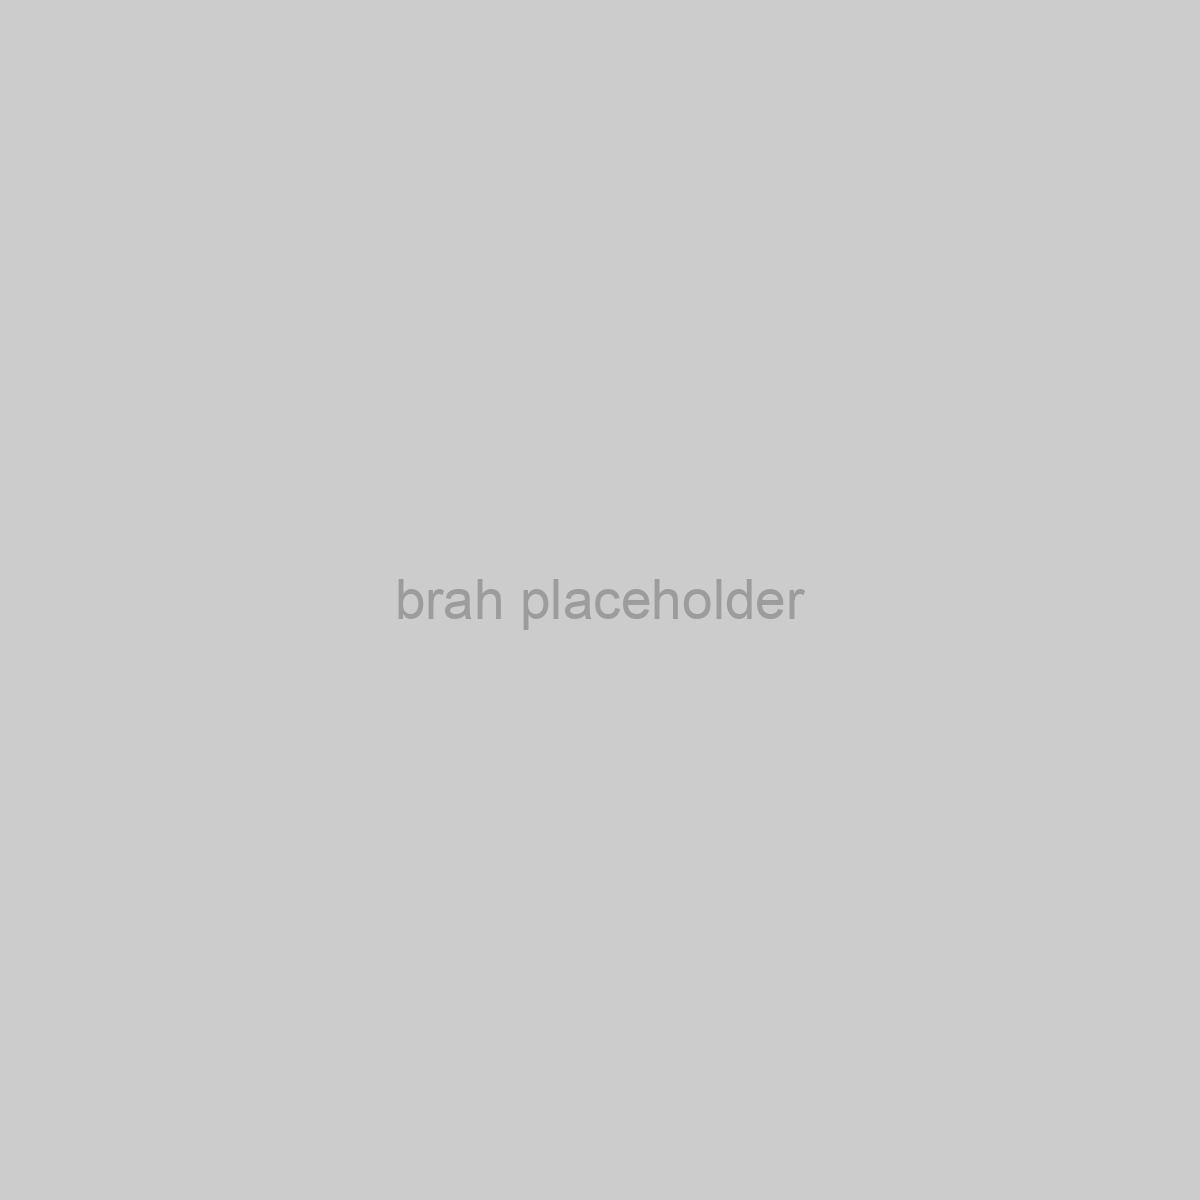 brah Placeholder Image